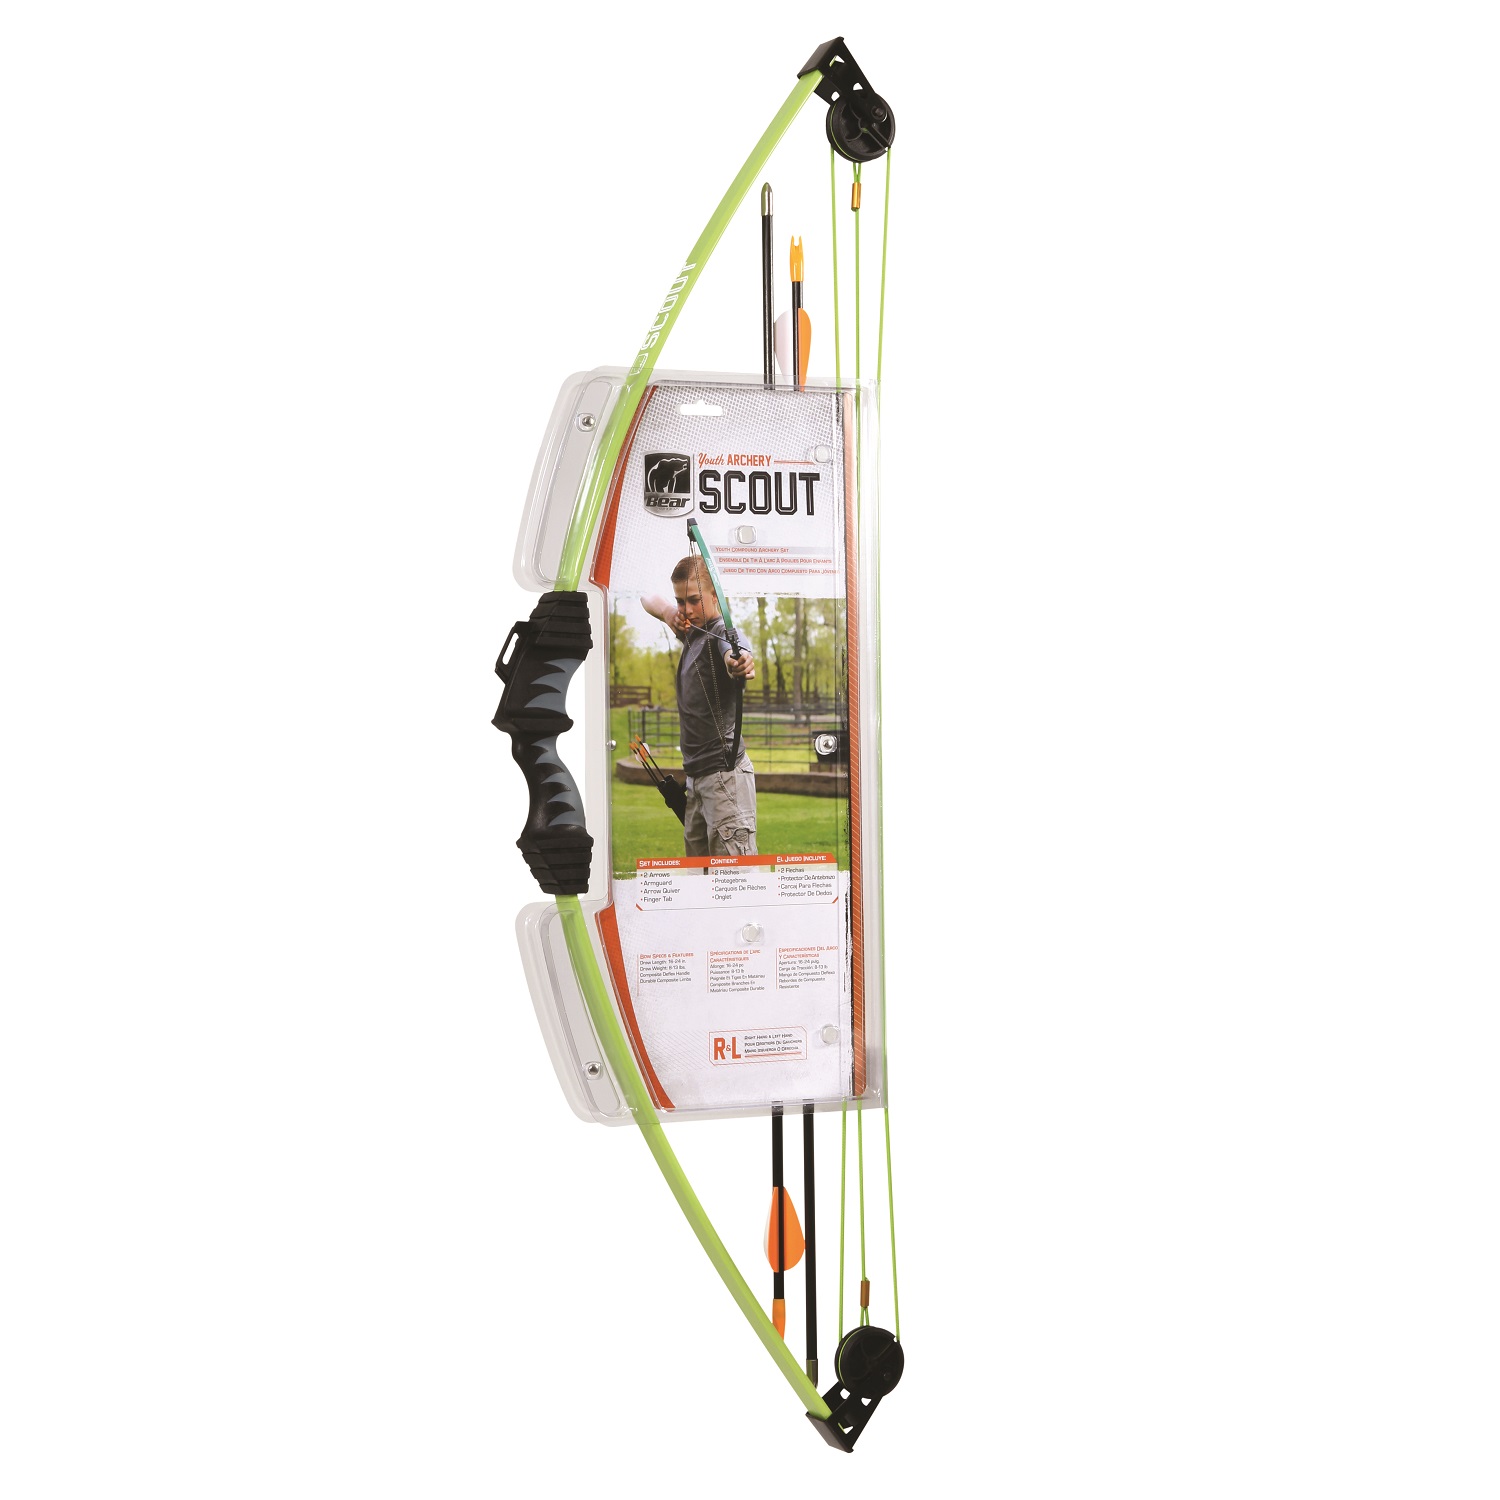 Bear Archery Scout Bow Set Flo Green - Ays6000gr